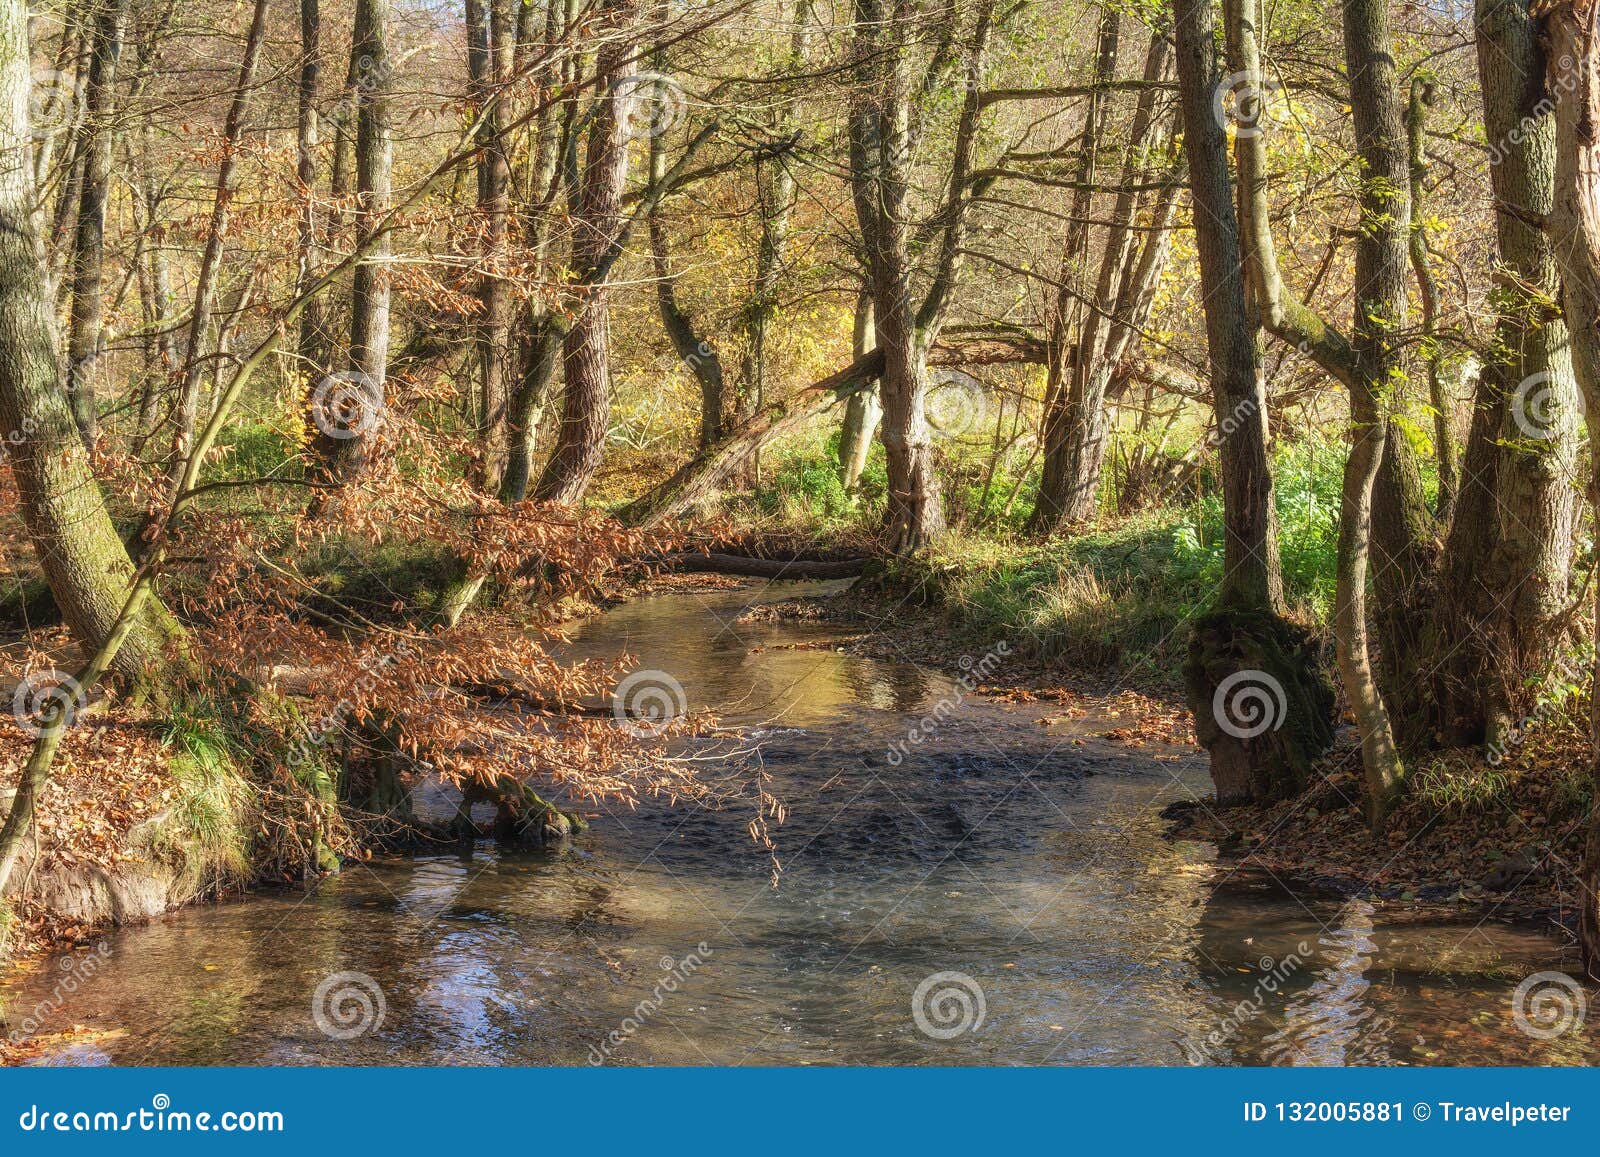 duessel river,neandertal,germany